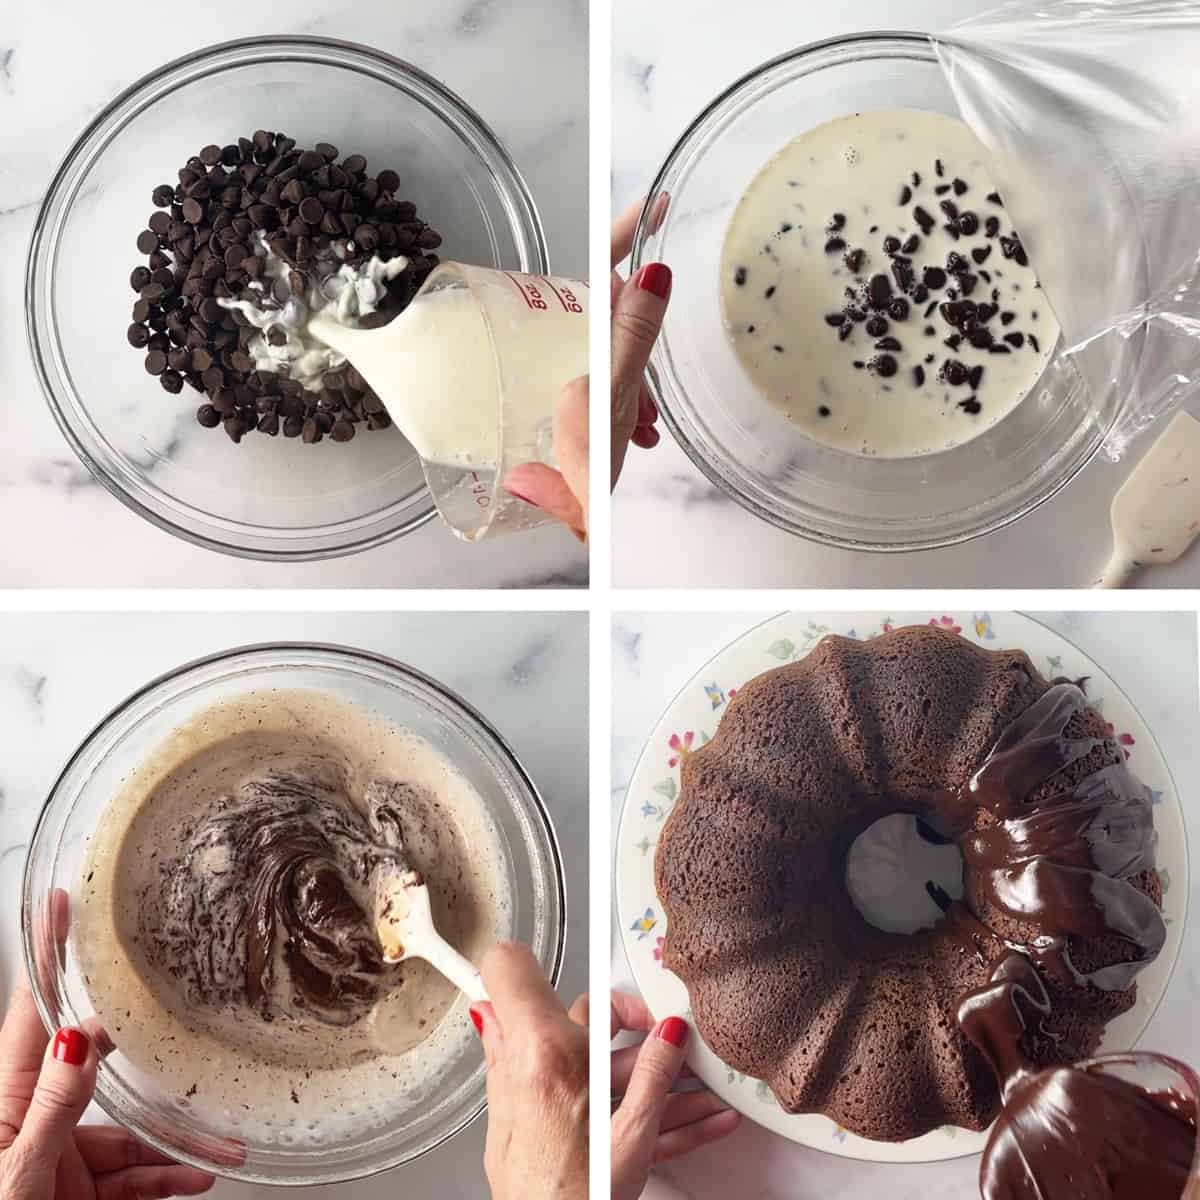 How to make chocolate glaze for cake.